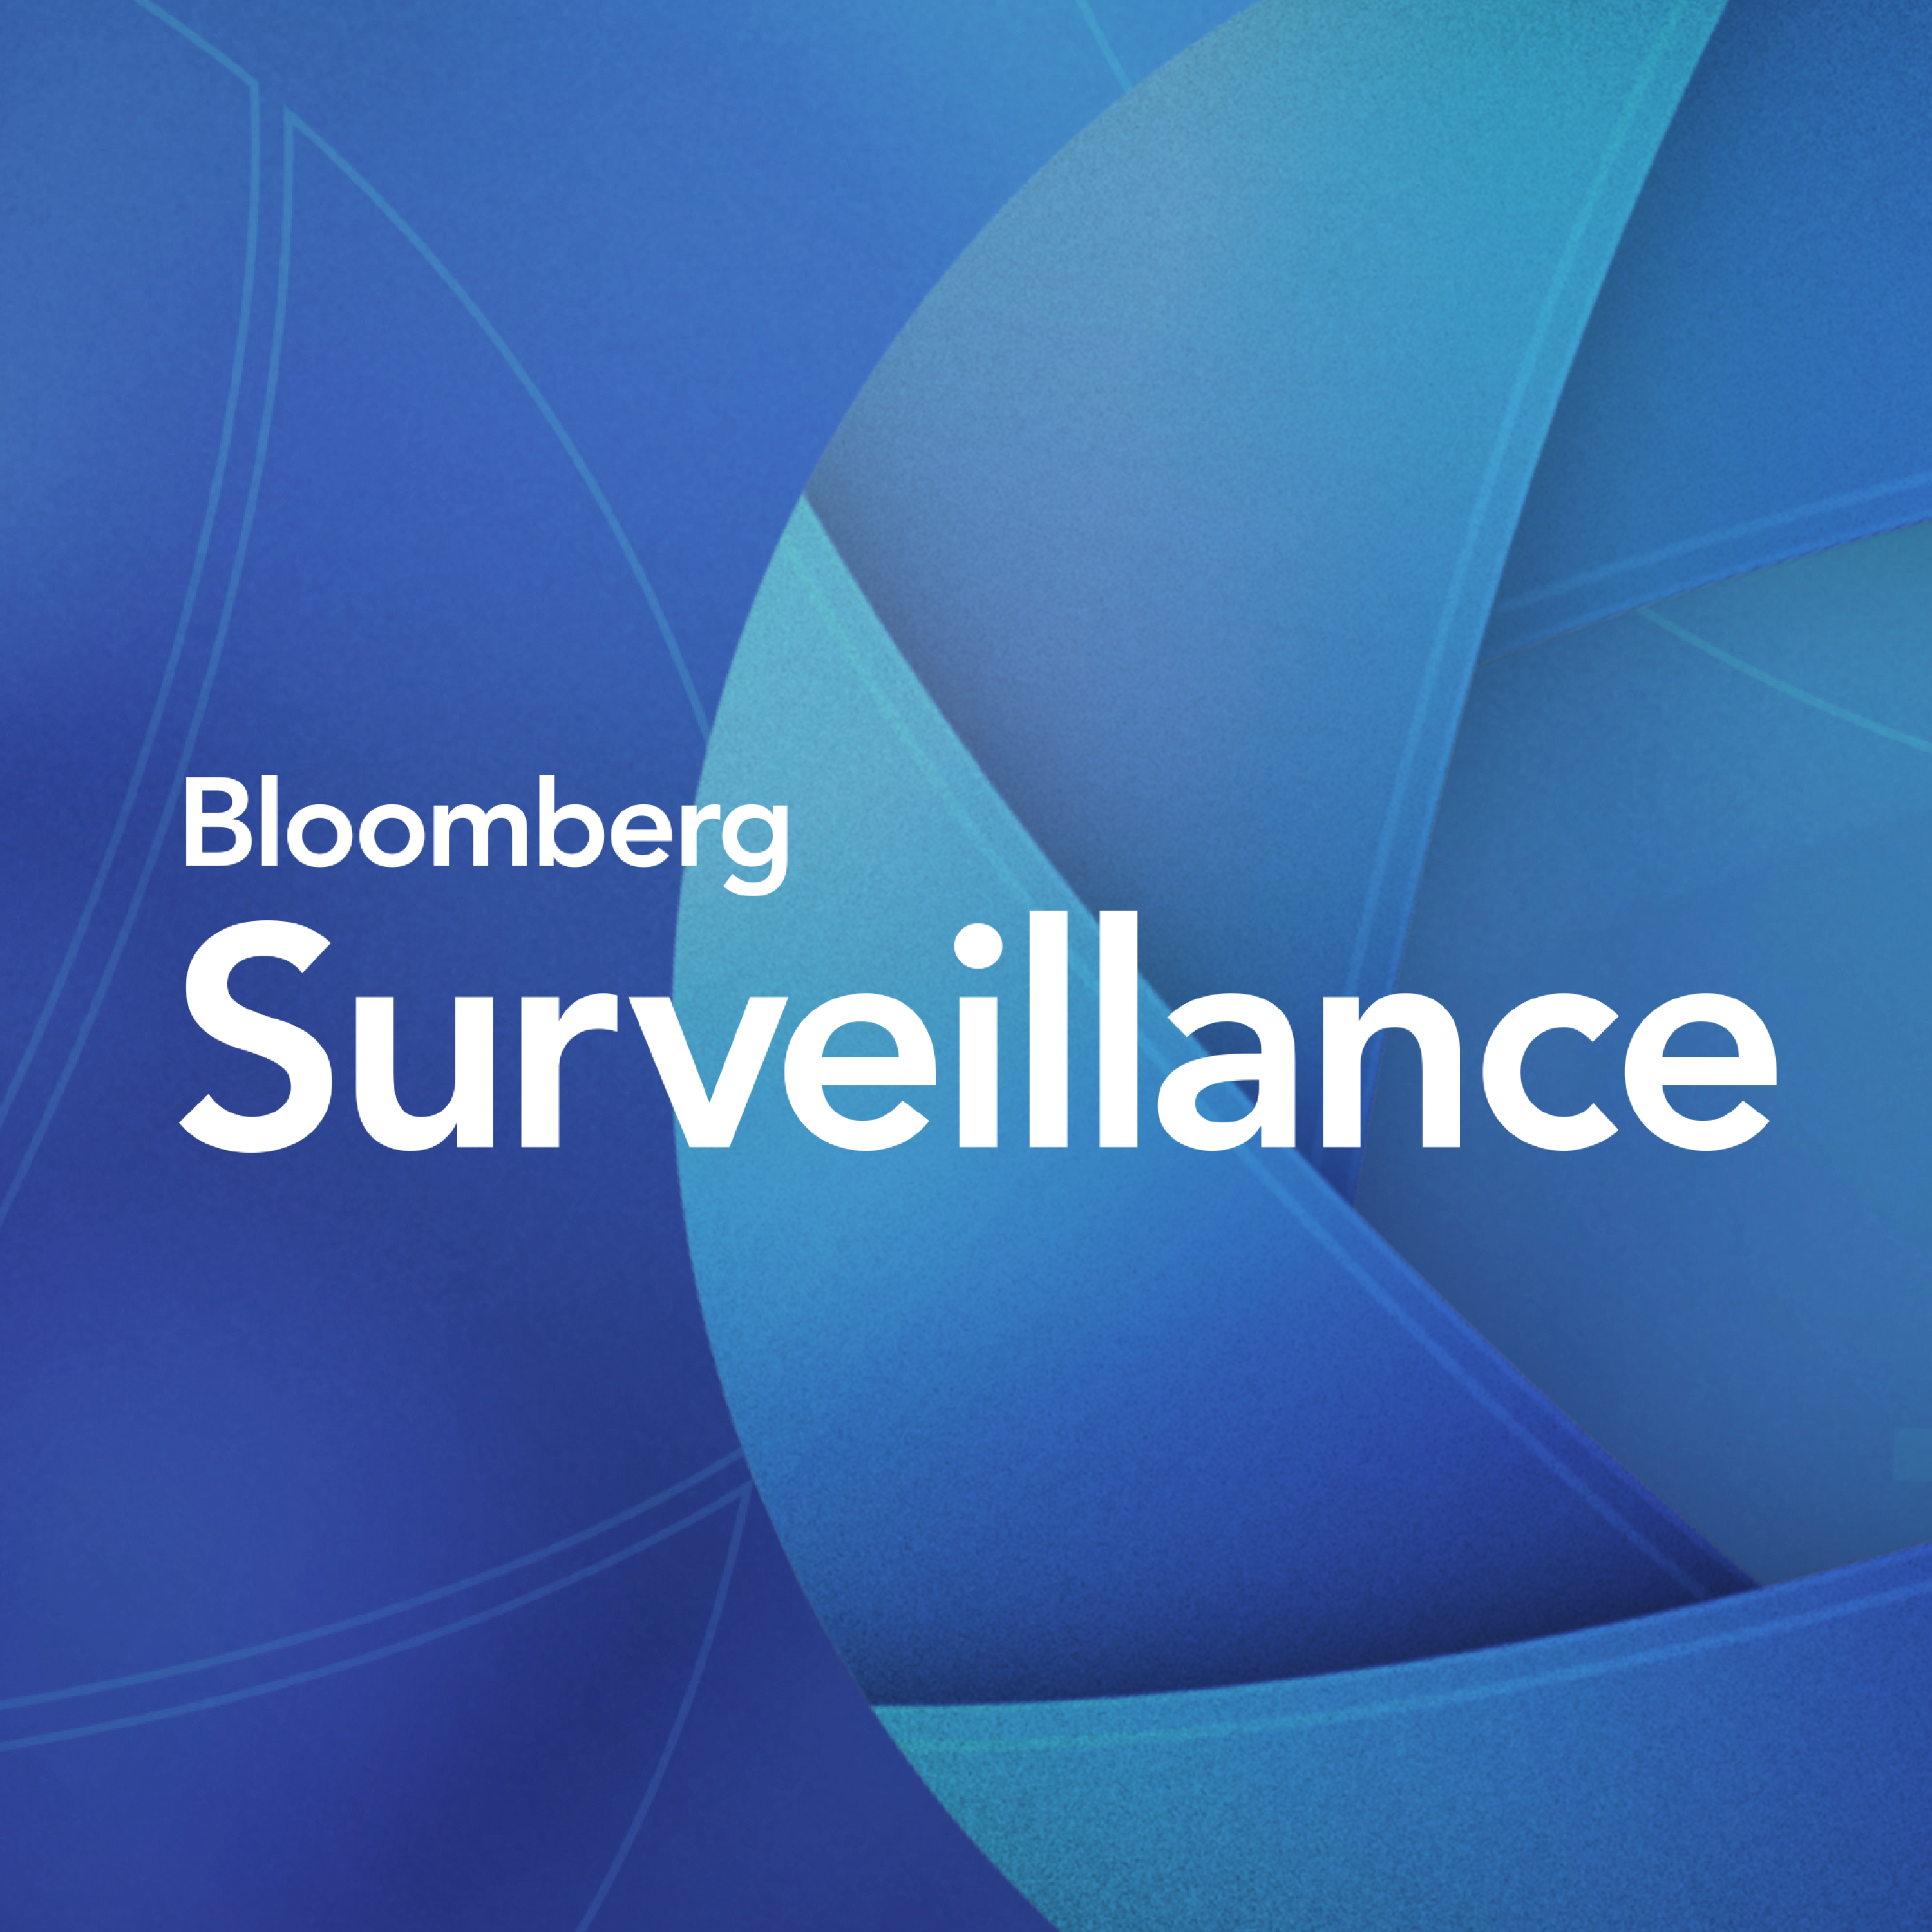 Surveillance: CS CEO Koerner Urges Patience